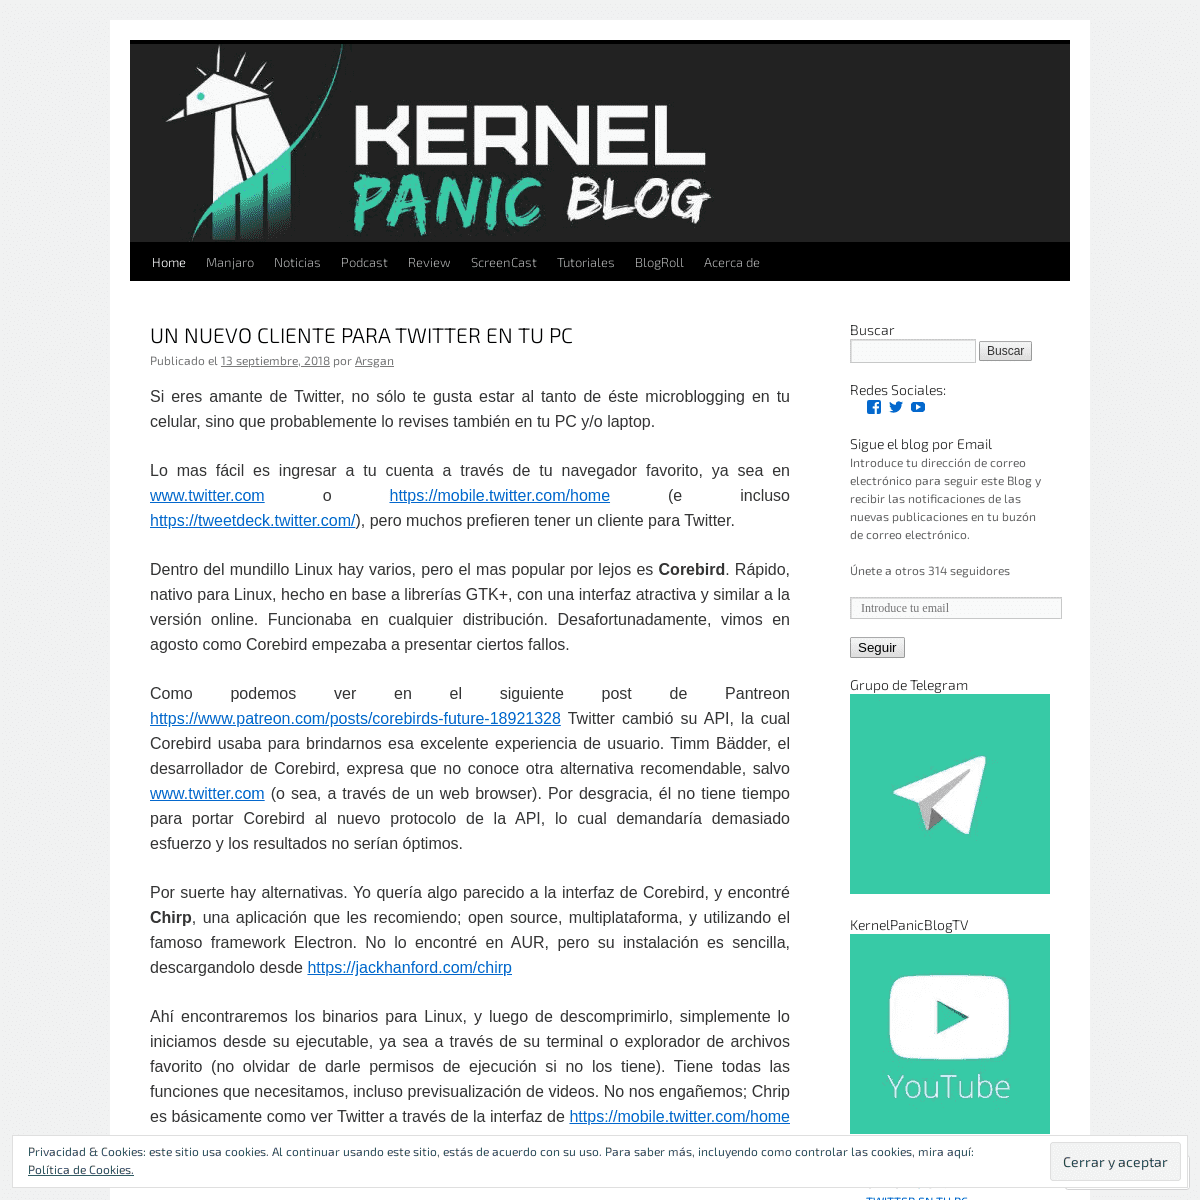 A complete backup of kernelpanicblog.wordpress.com